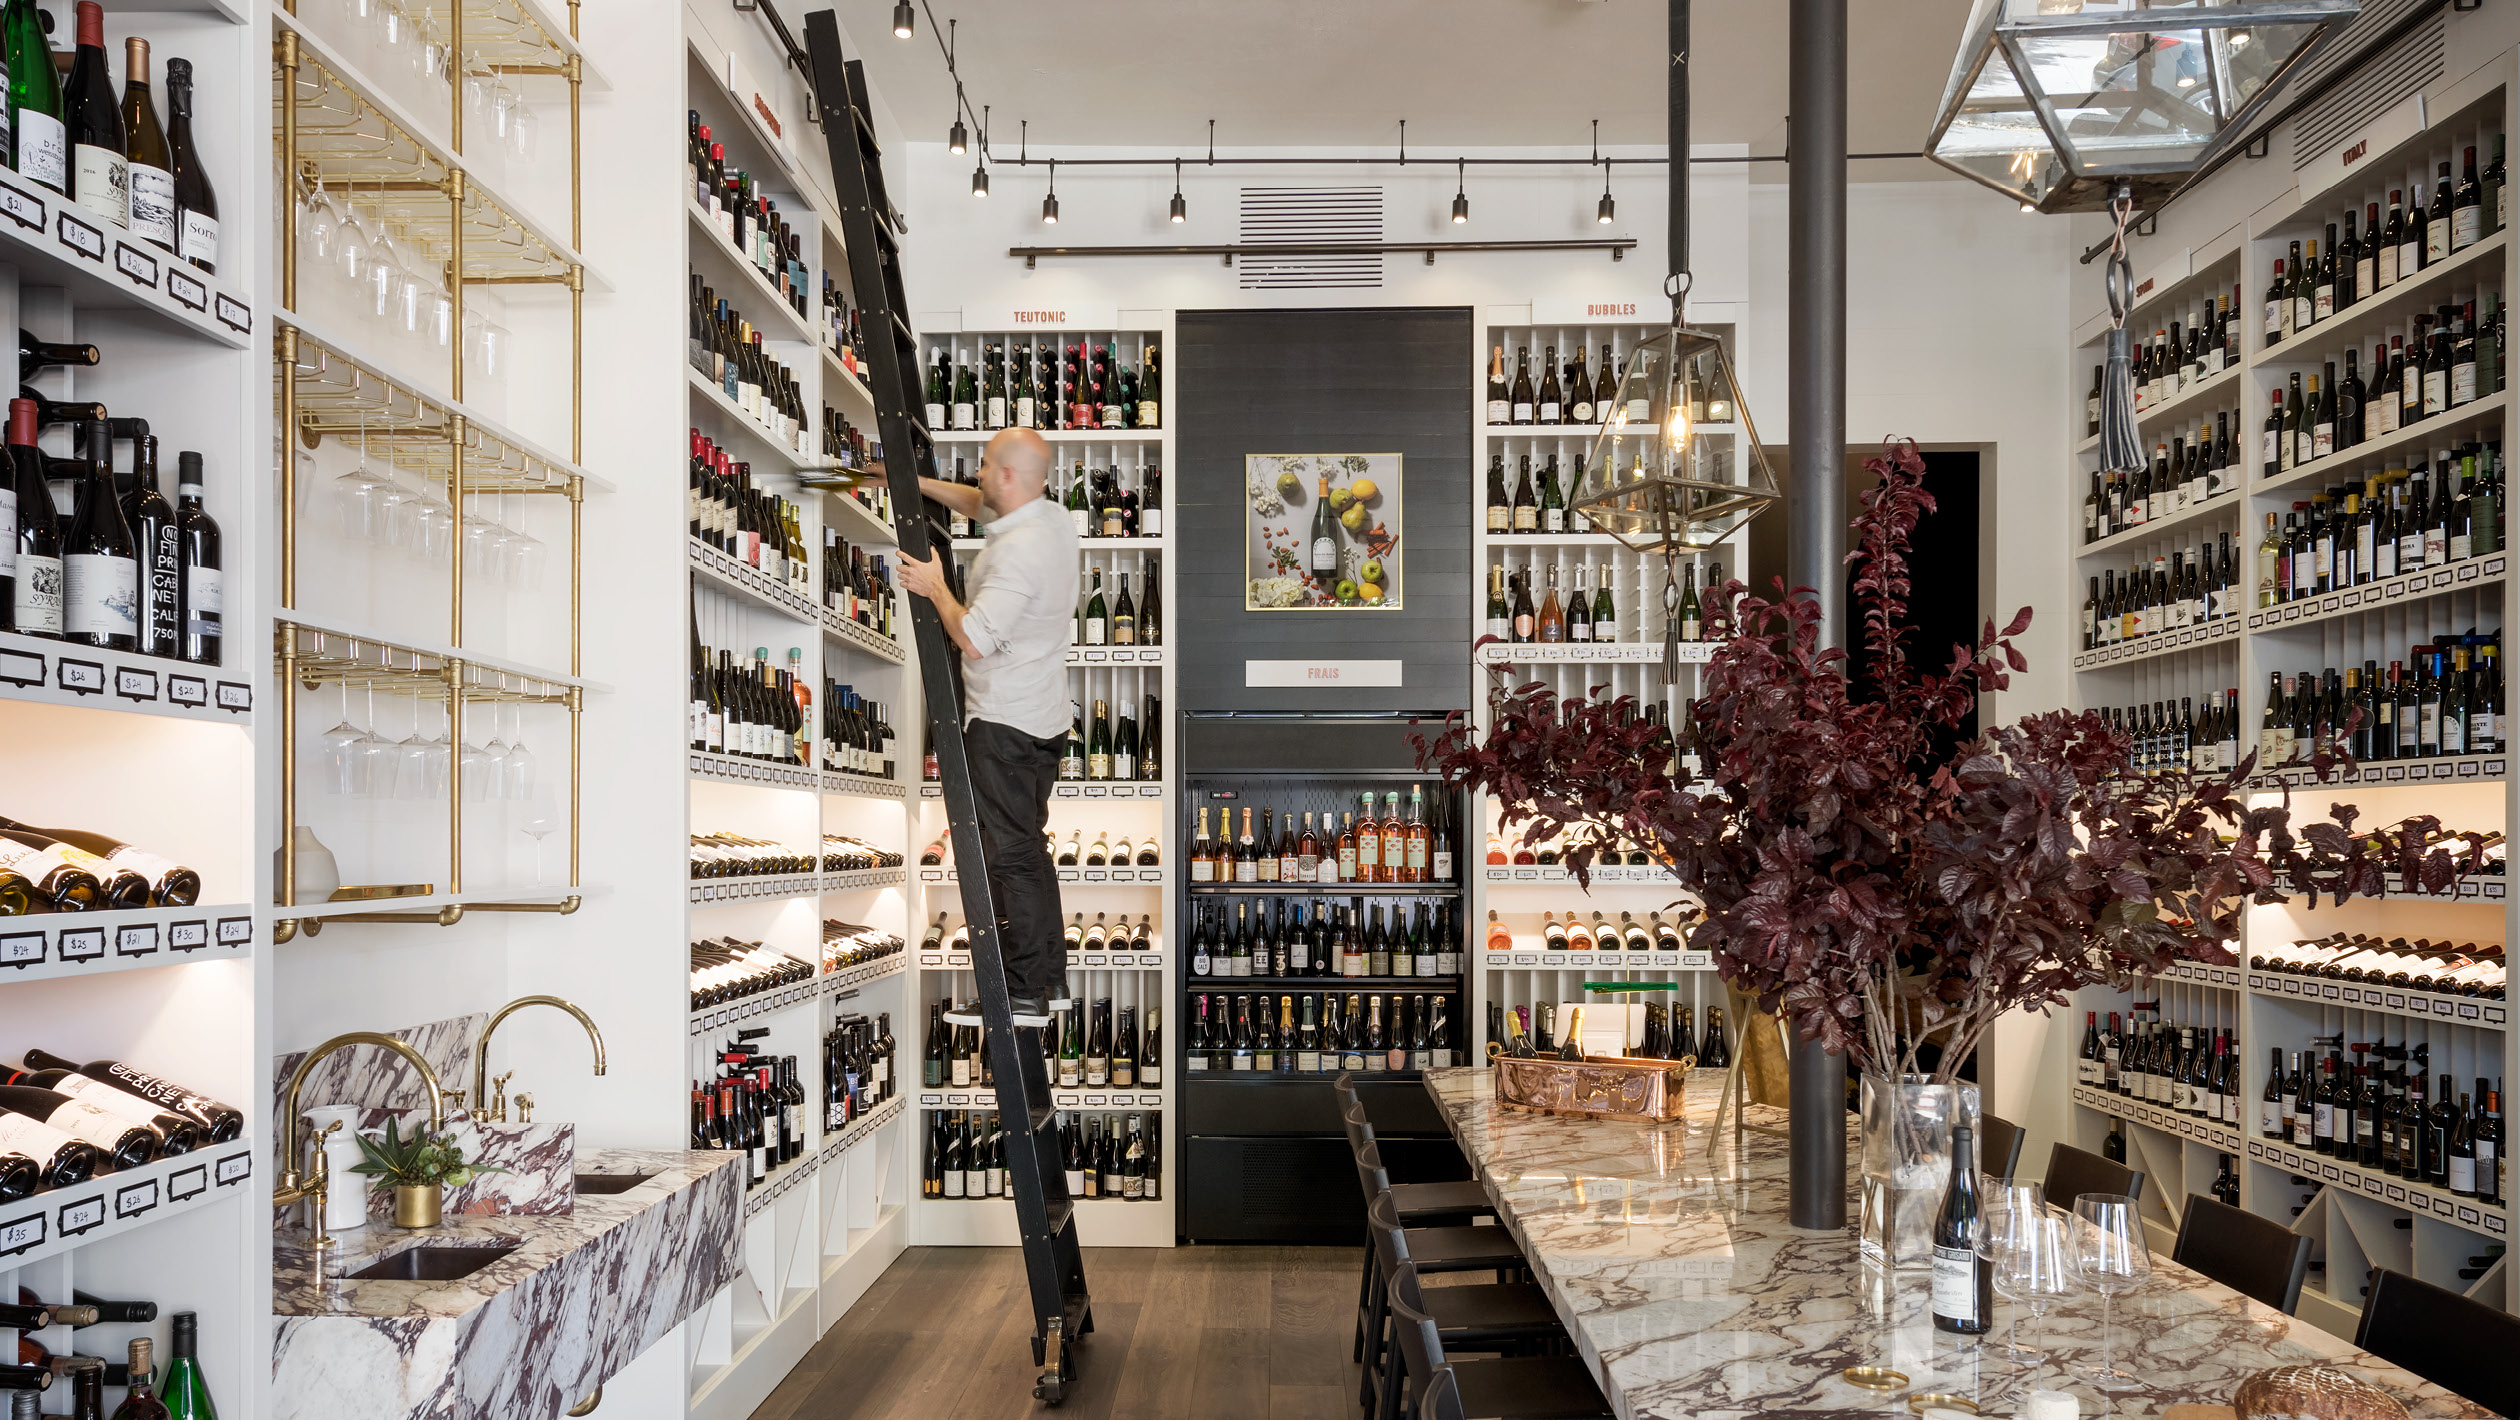 provenance kitchen bar and retail wine